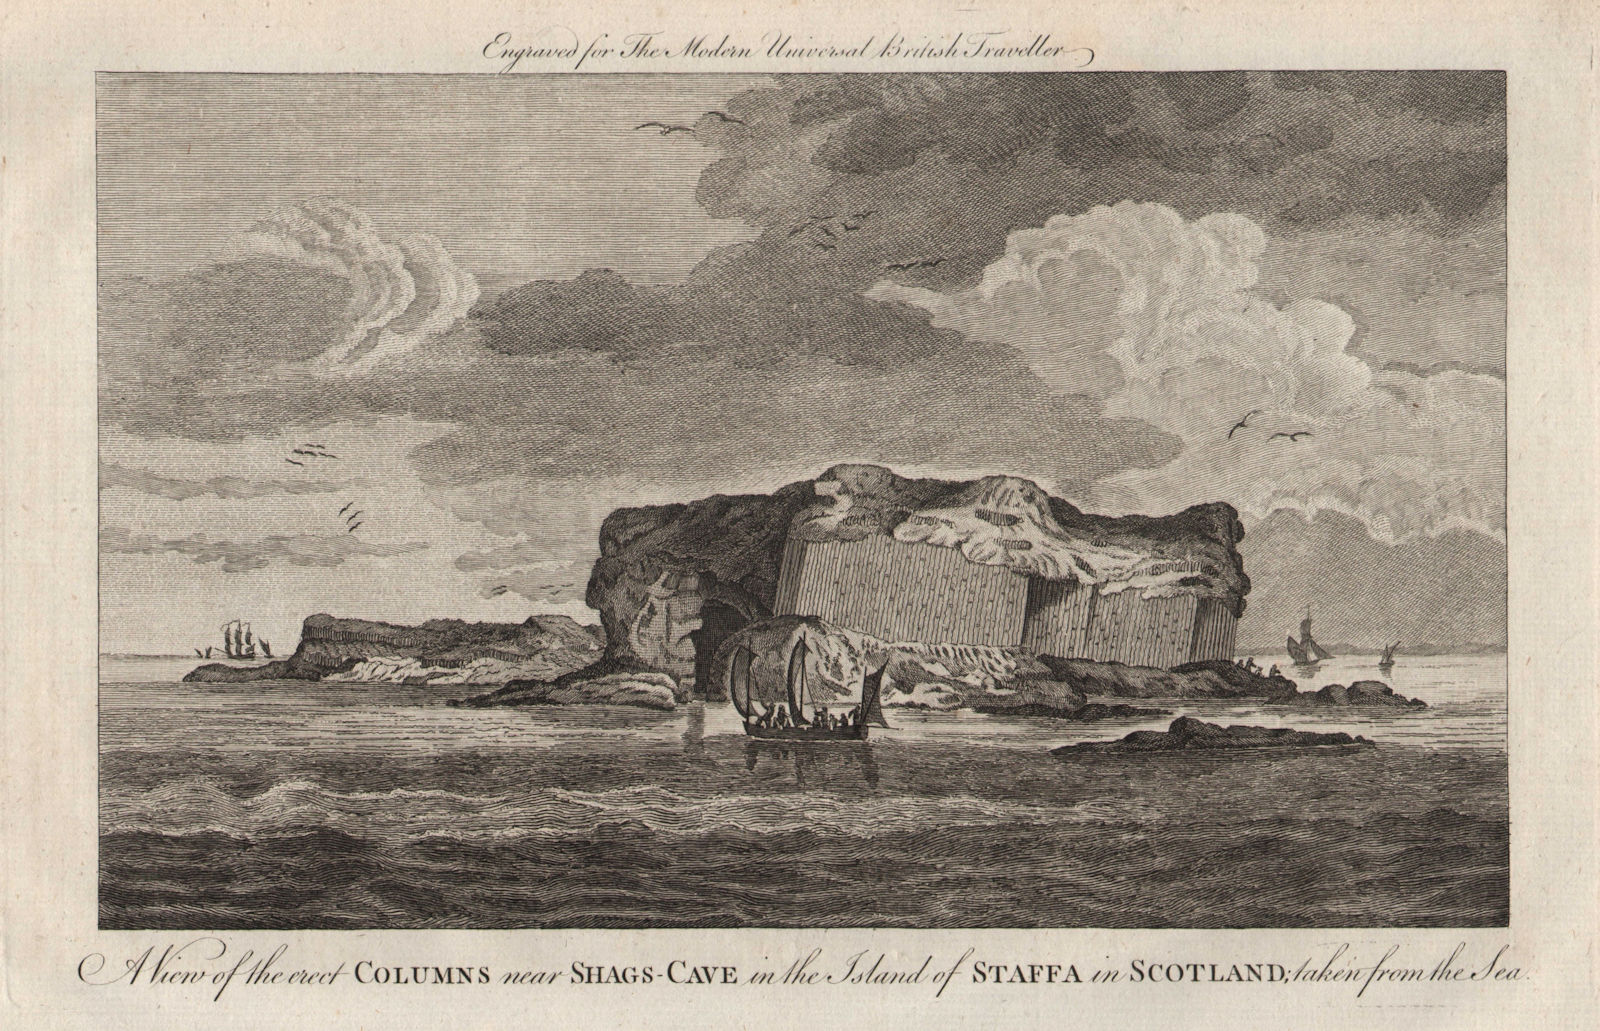 Shag's (Fingal's) Cave, island of Staffa, Scotland, from the sea. MURRAY 1779